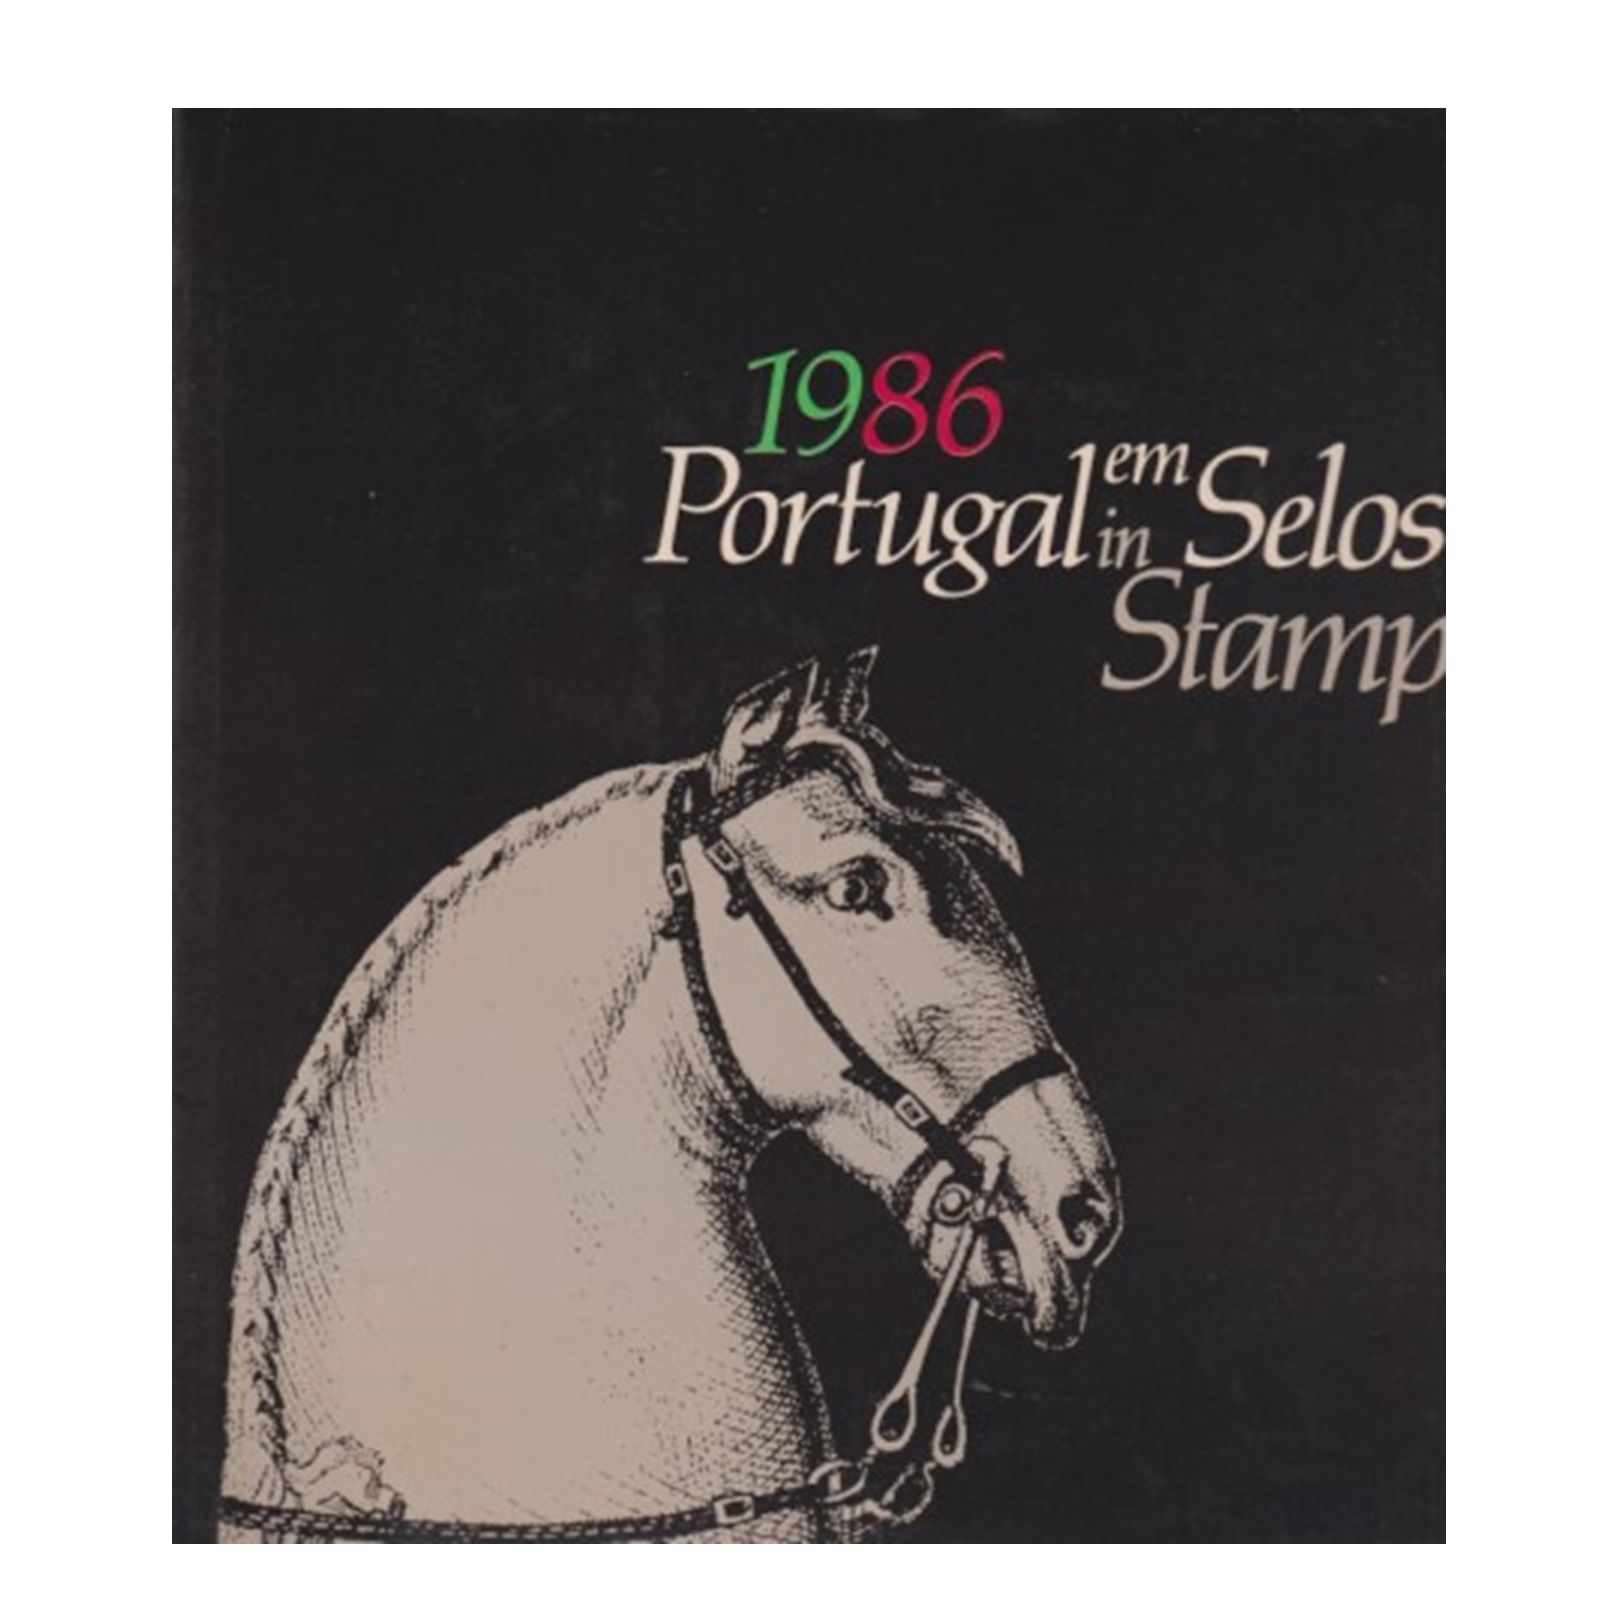 PORTUGAL EM SELOS – 1986